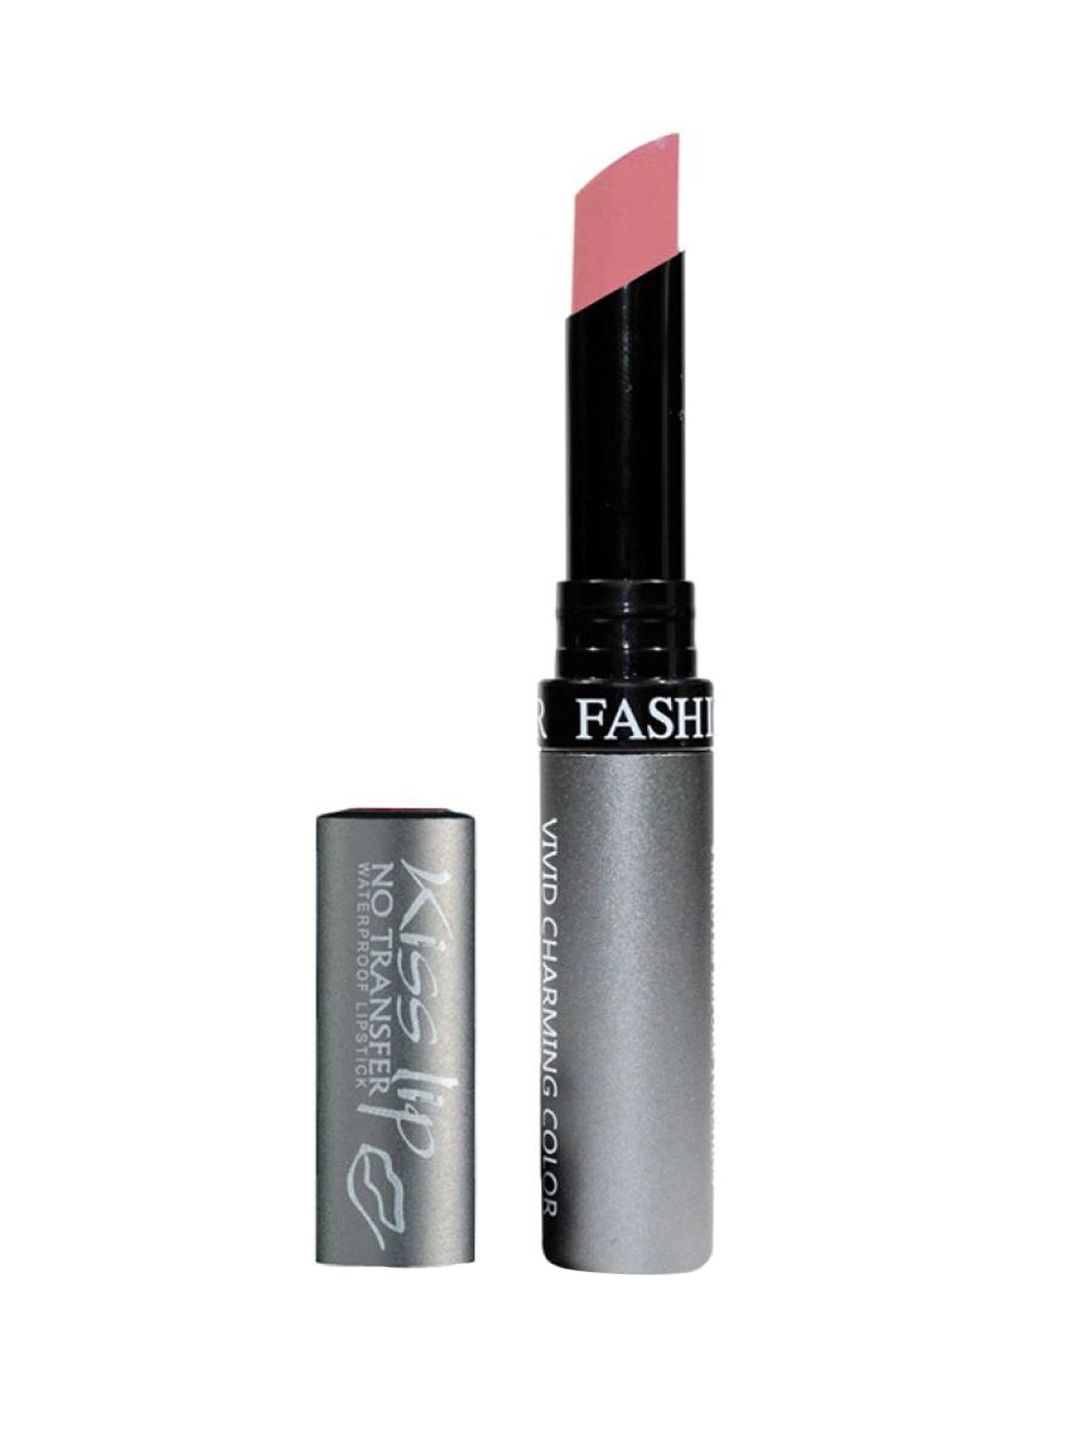 Fashion Colour Kiss Lip Vivid Charming Color No Transfer Lipstick - Warm Pink 95 Price in India